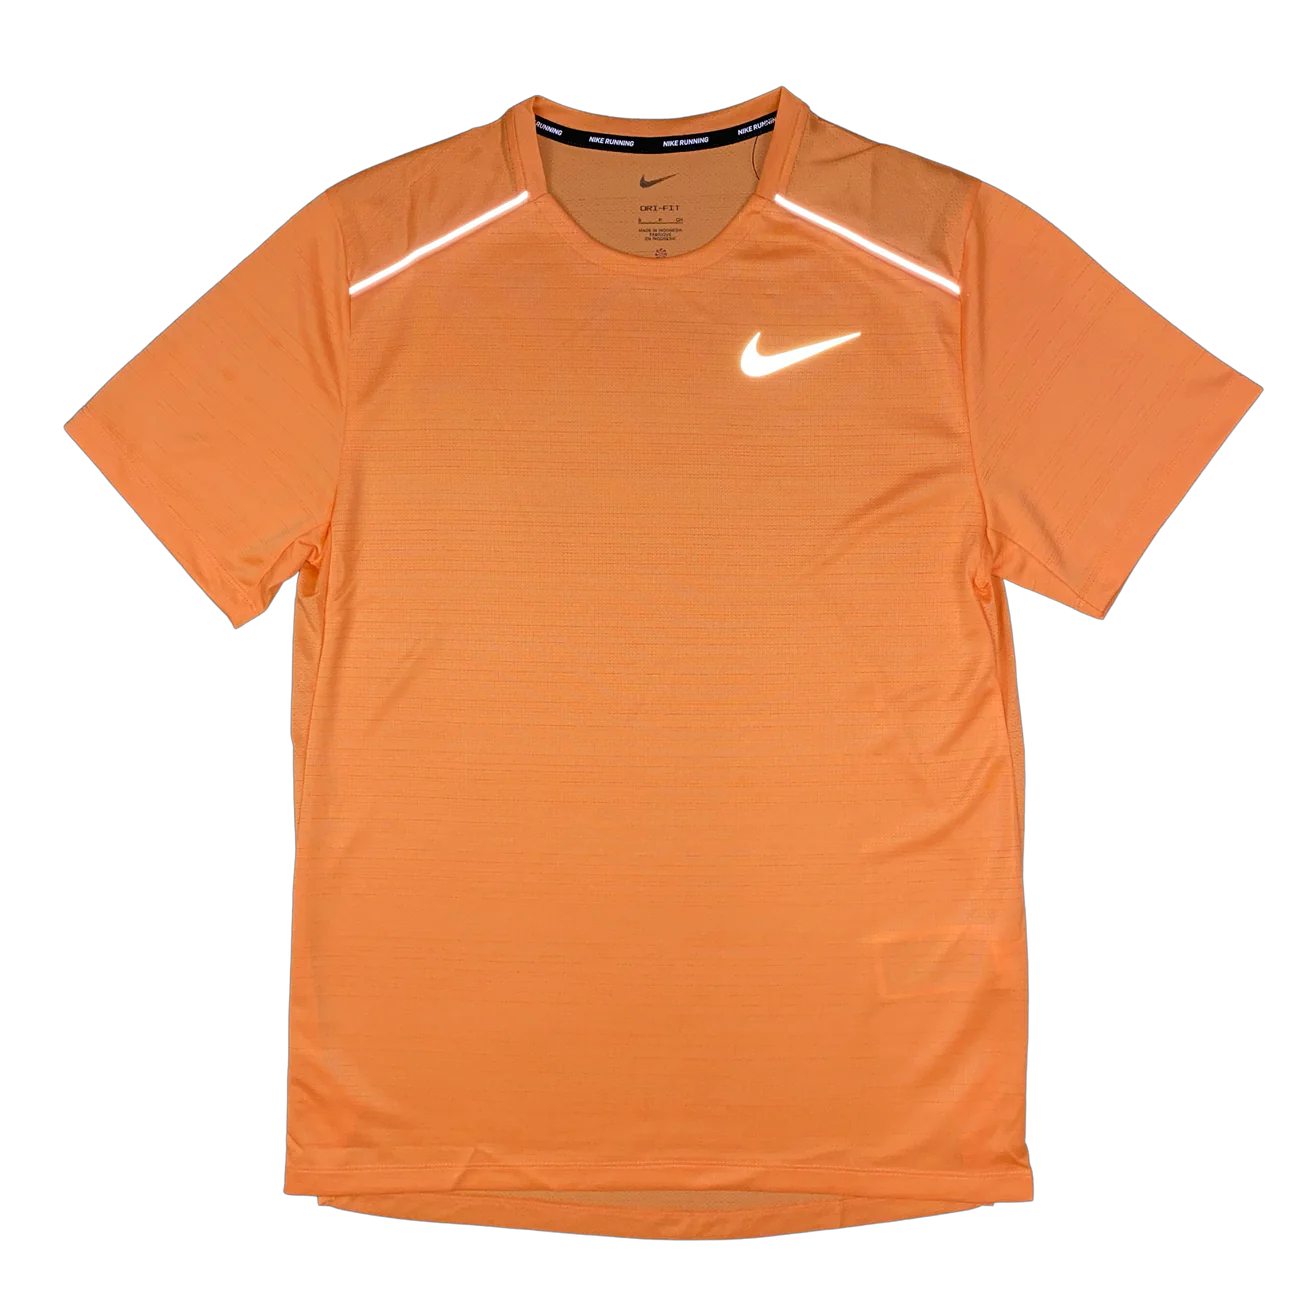 Nike Miler 1.0 T-Shirt - Alpha Orange